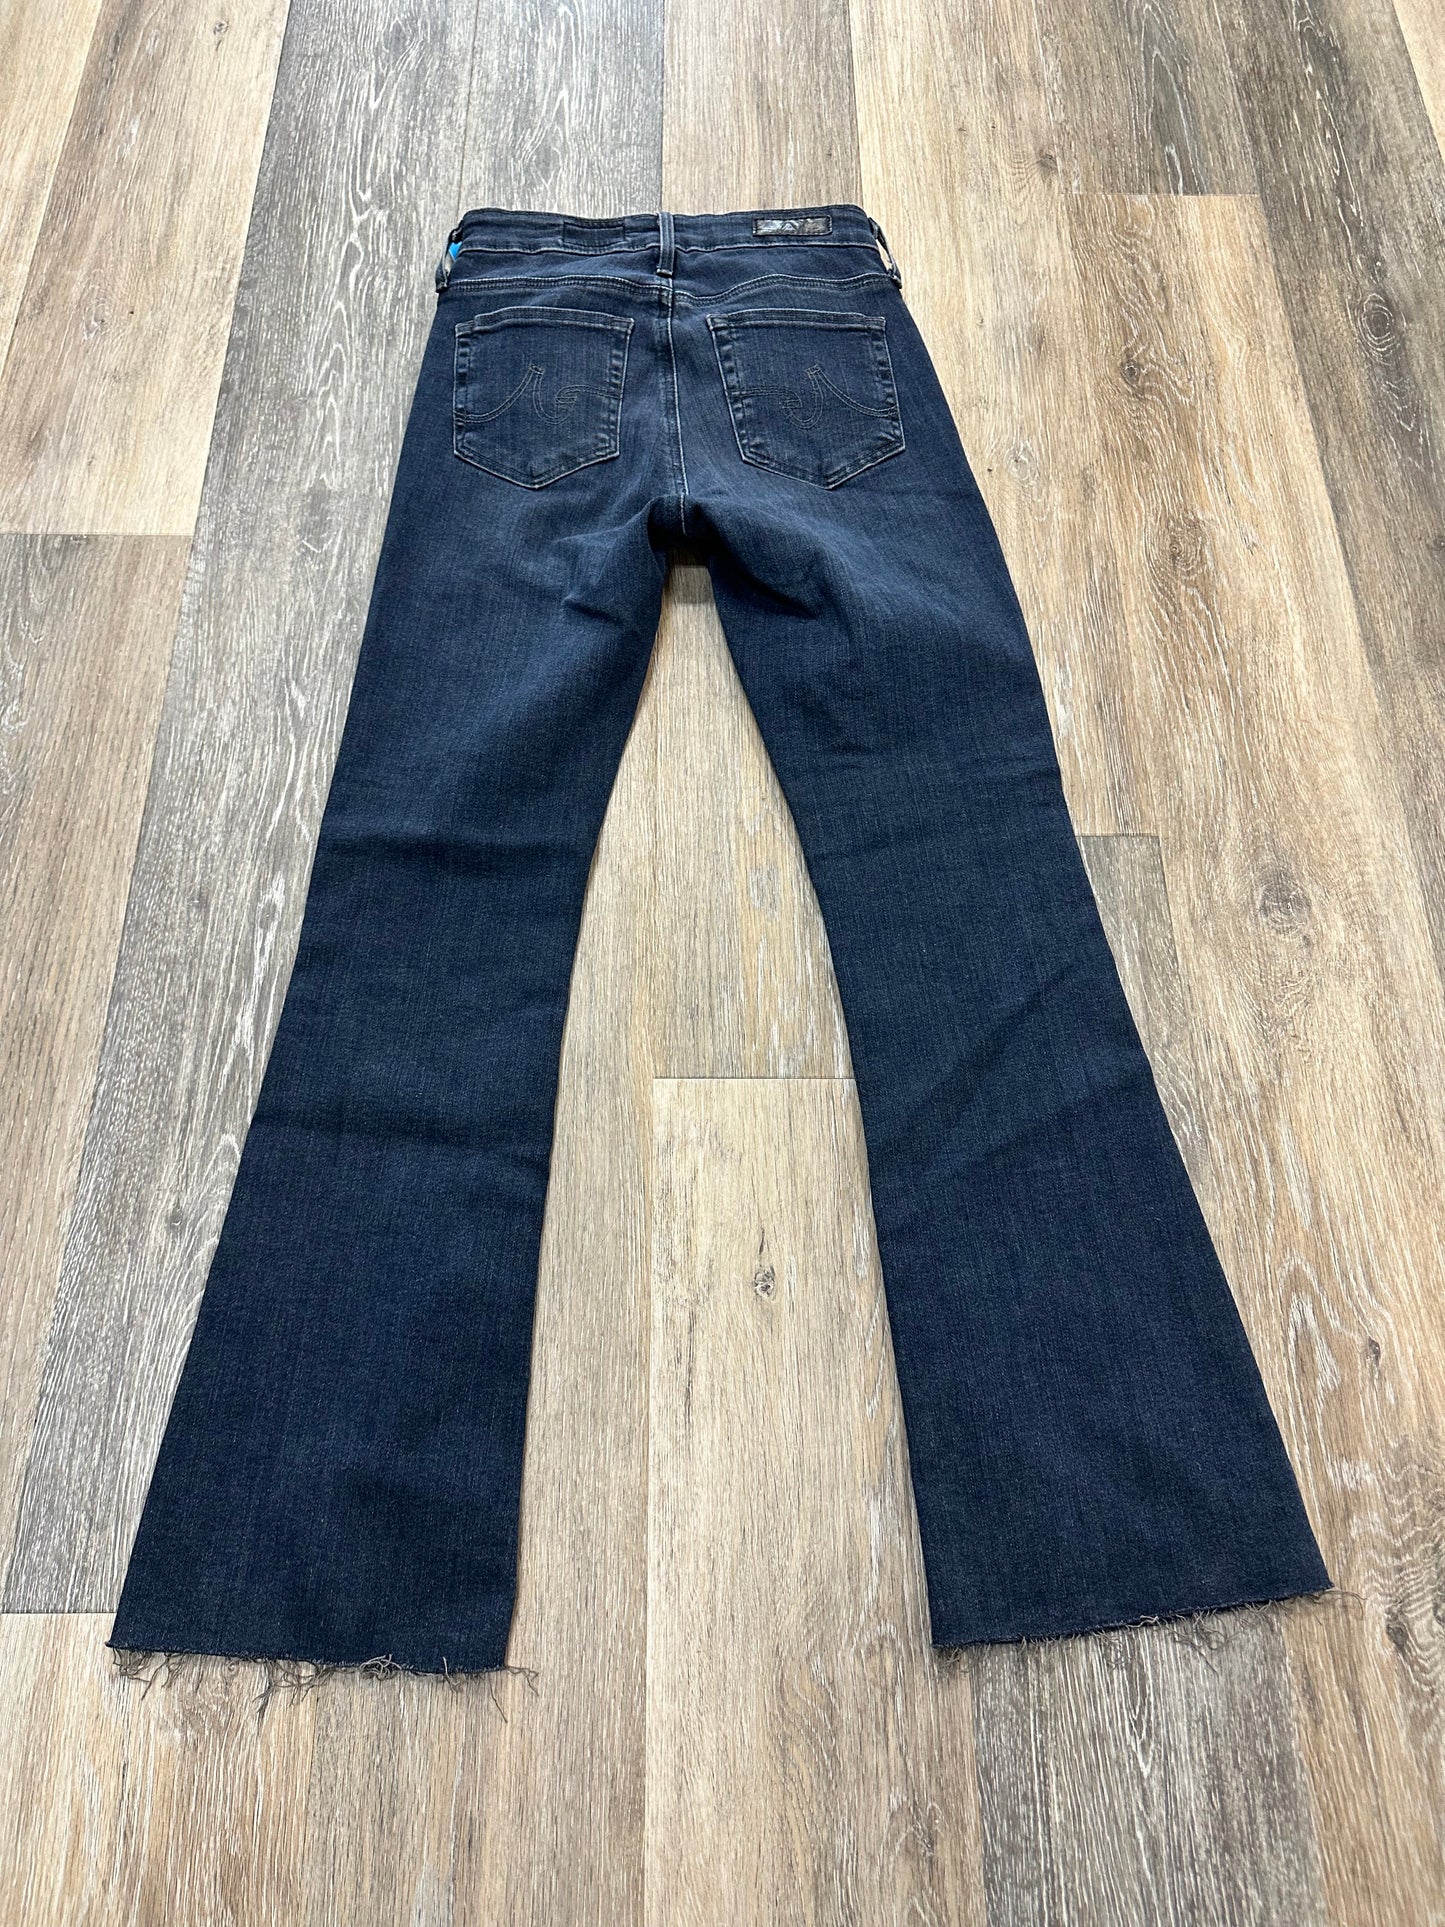 Blue Denim Jeans Designer Adriano Goldschmied, Size 0/24